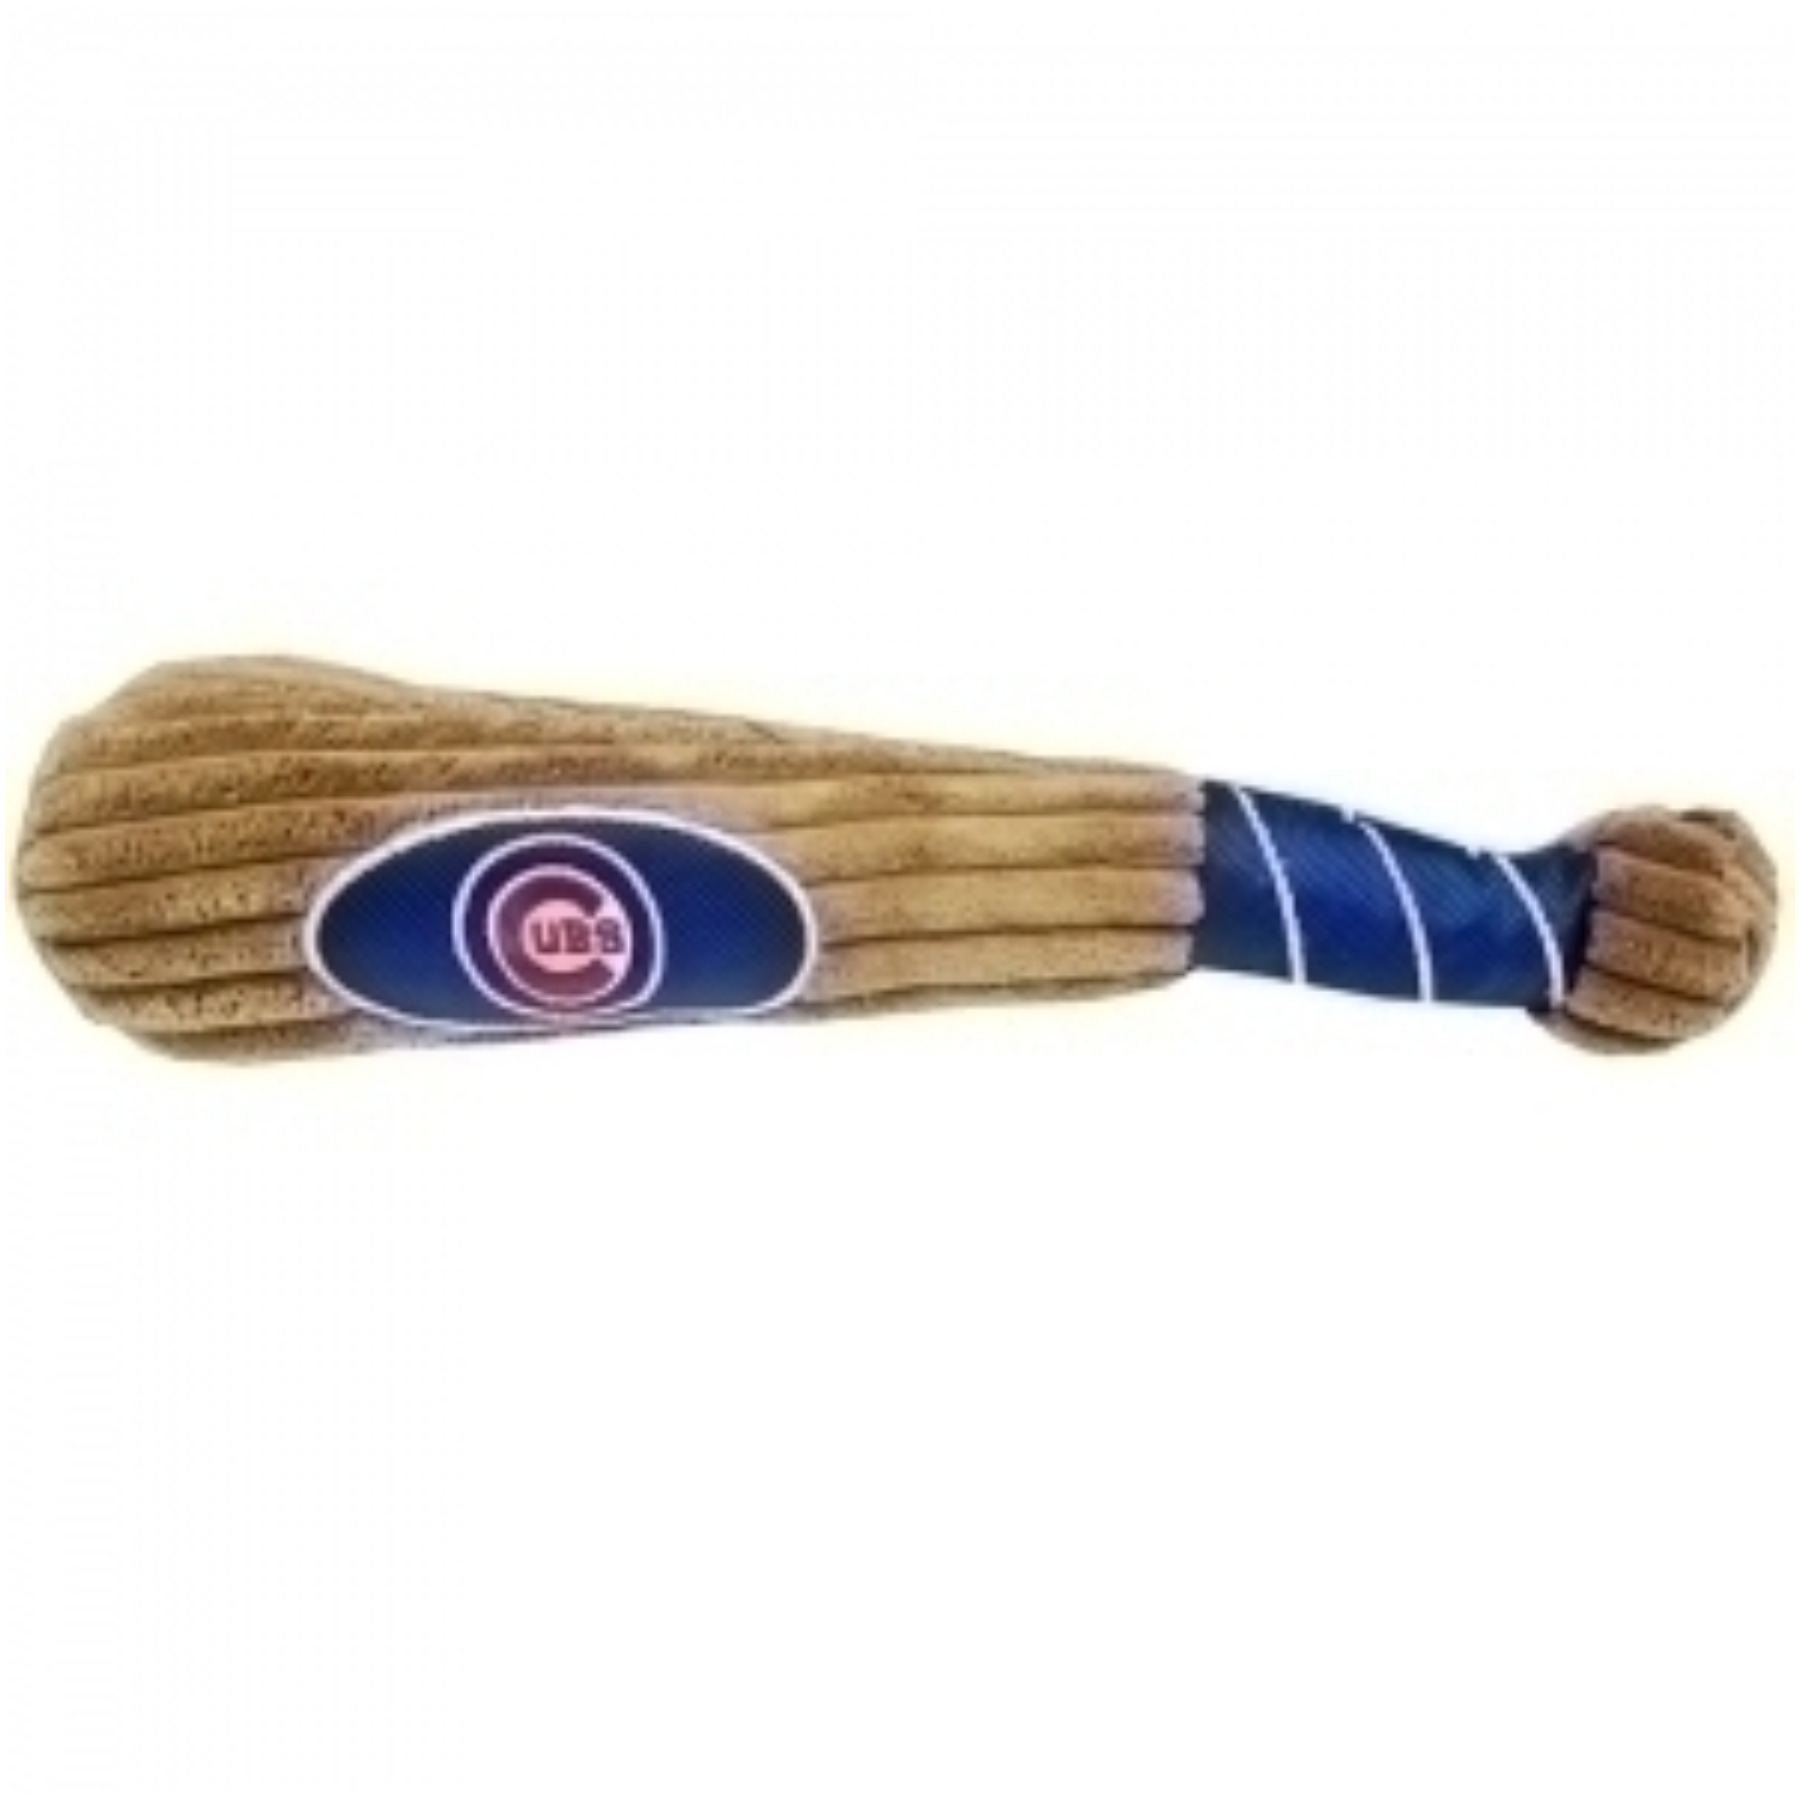 Chicago Cubs Bat Toy